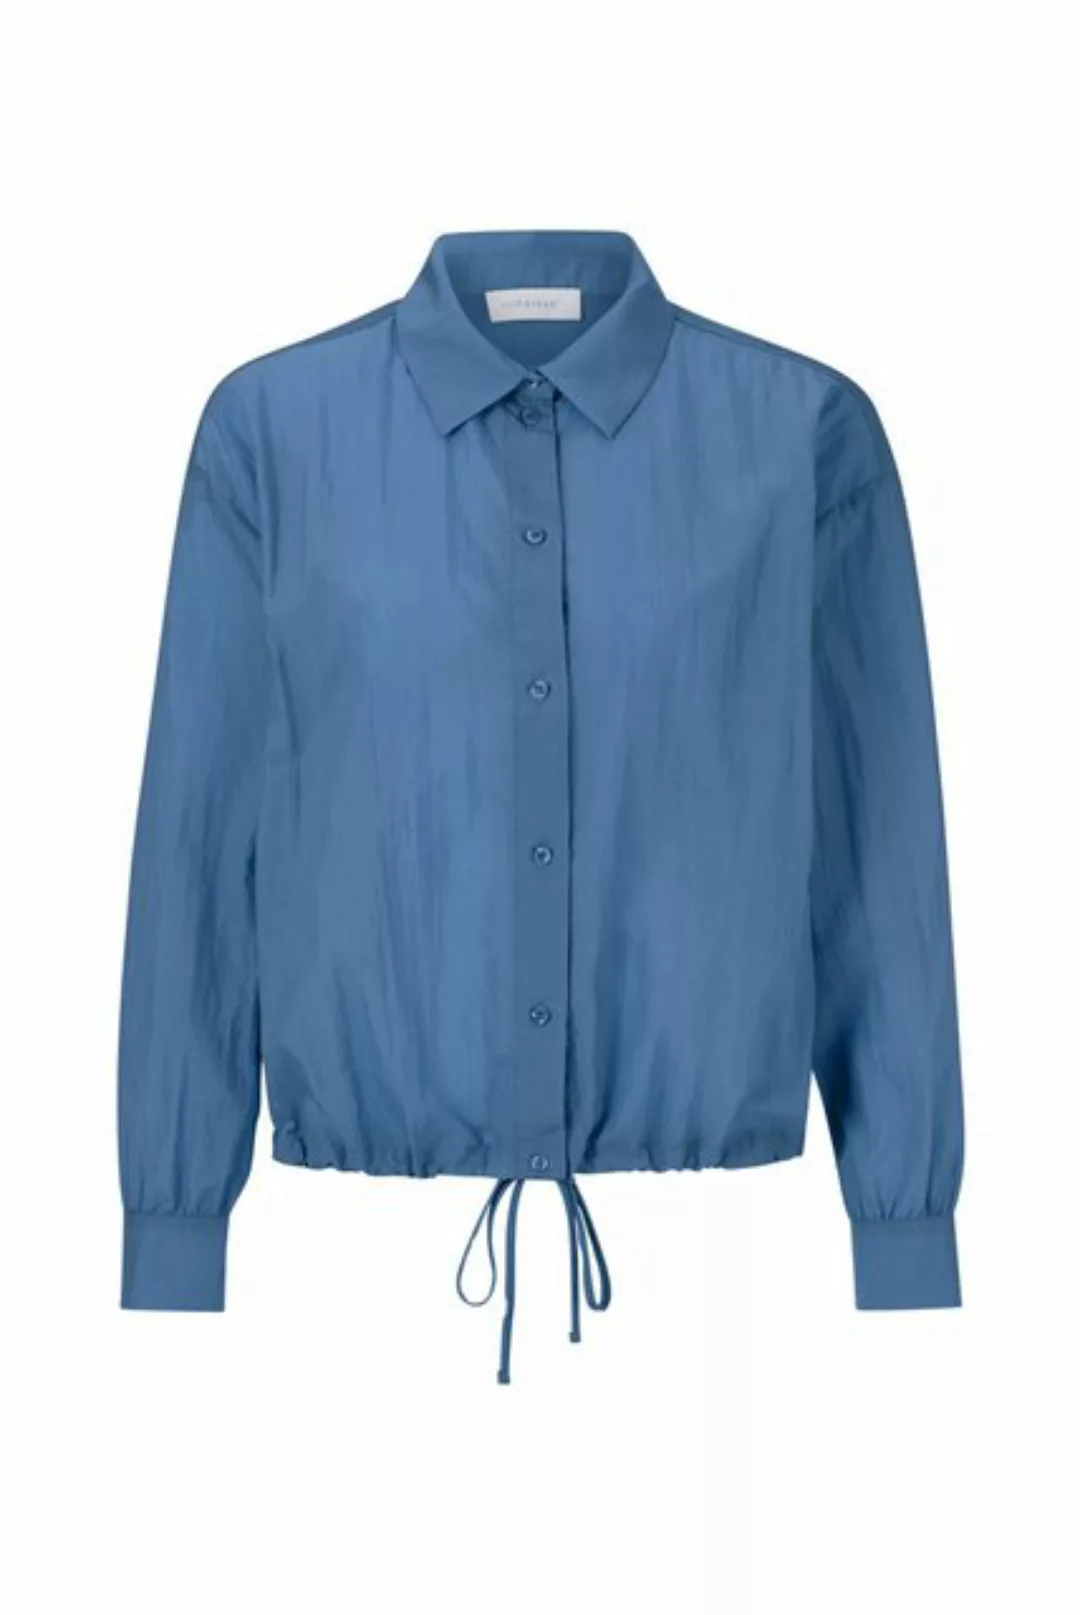 Rich & Royal Blusentop parachute blouse günstig online kaufen